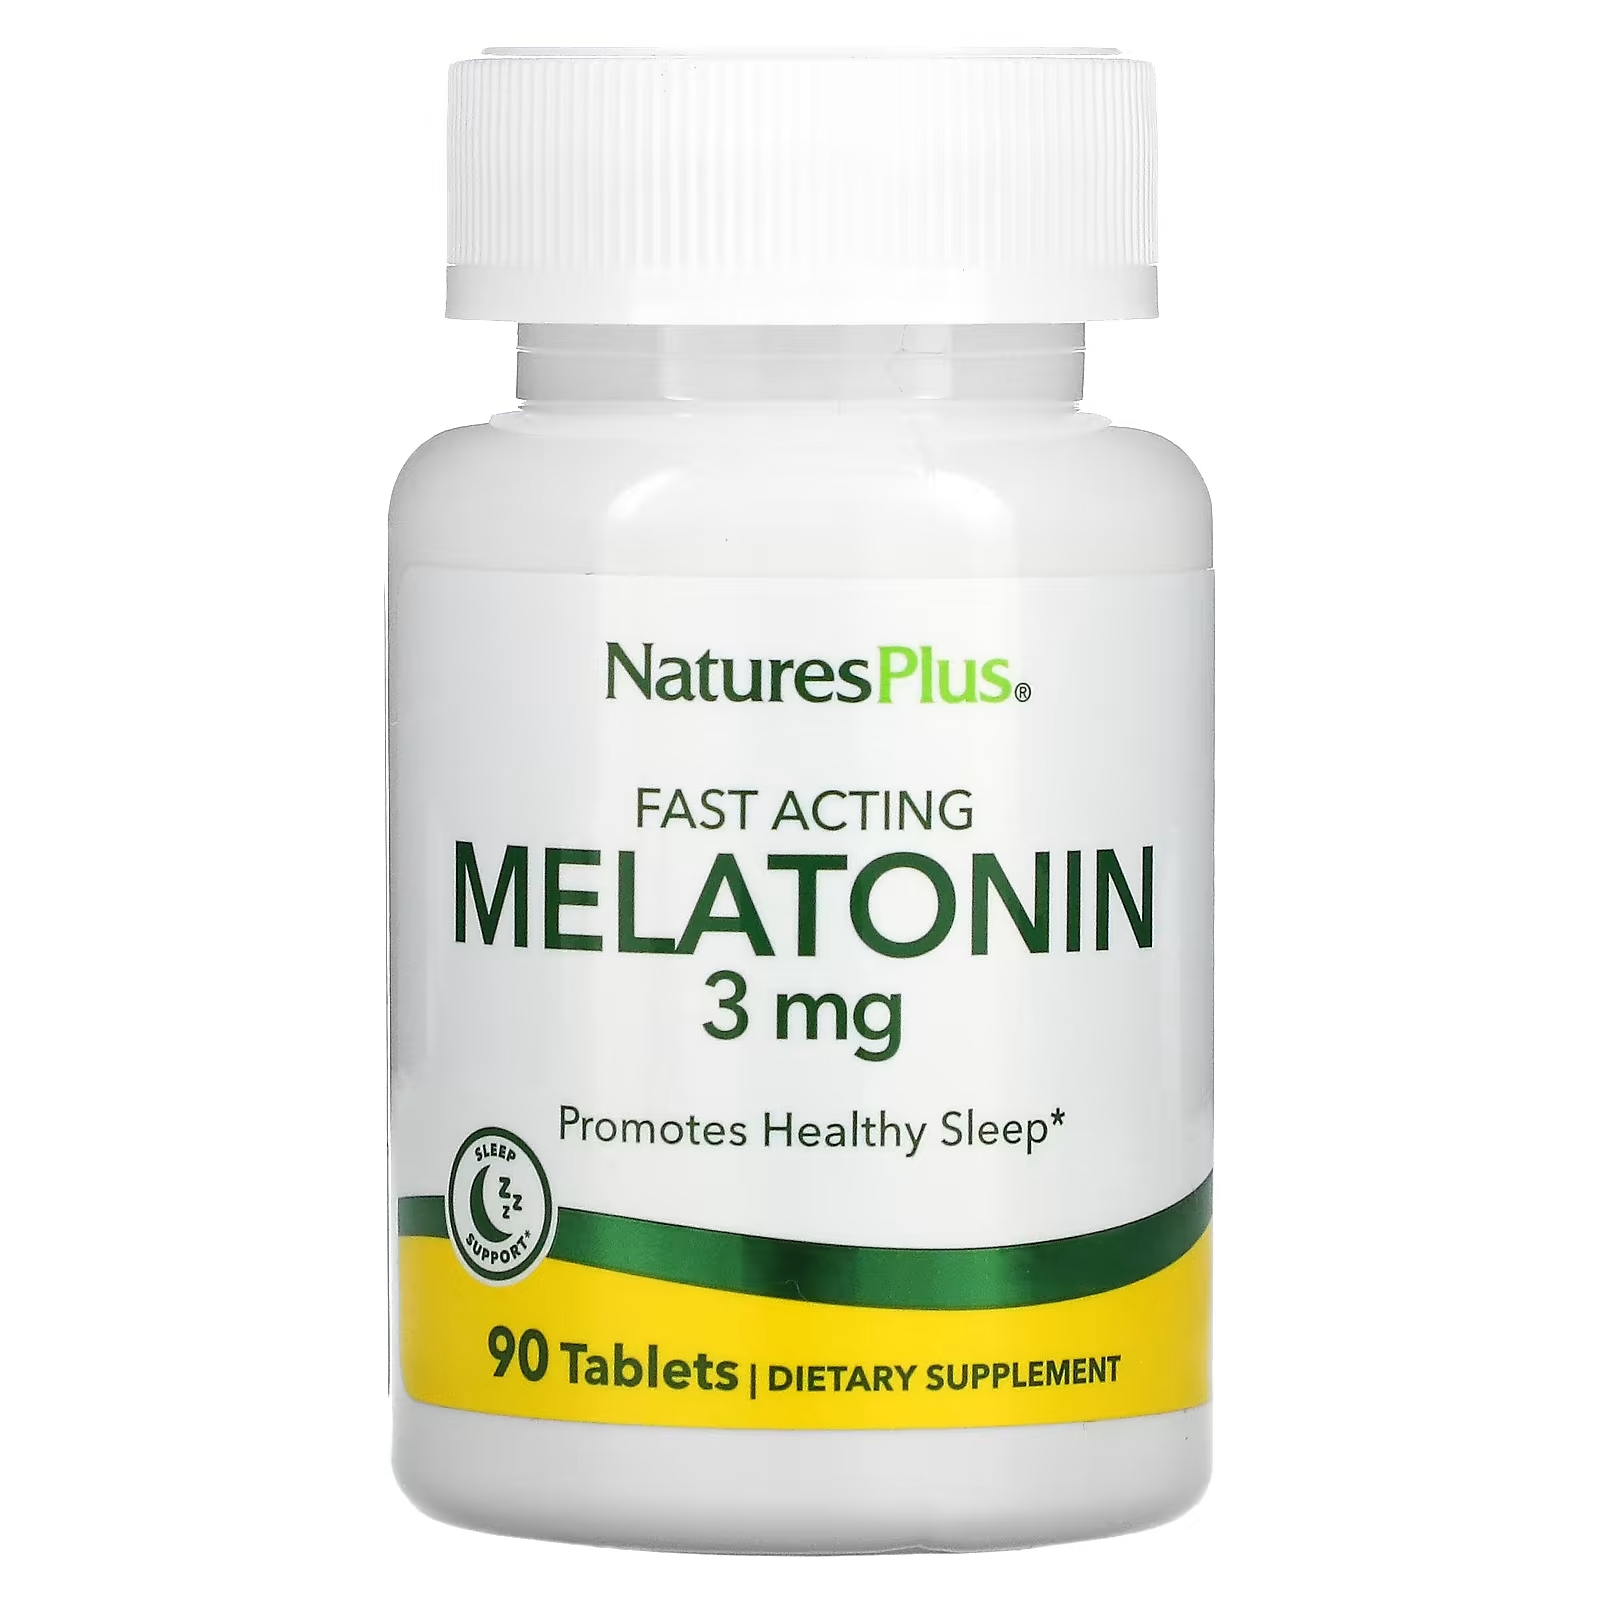 NaturesPlus мелатонин быстродействующий 3 мг, 90 таблеток country life мелатонин 3 мг 90 таблеток